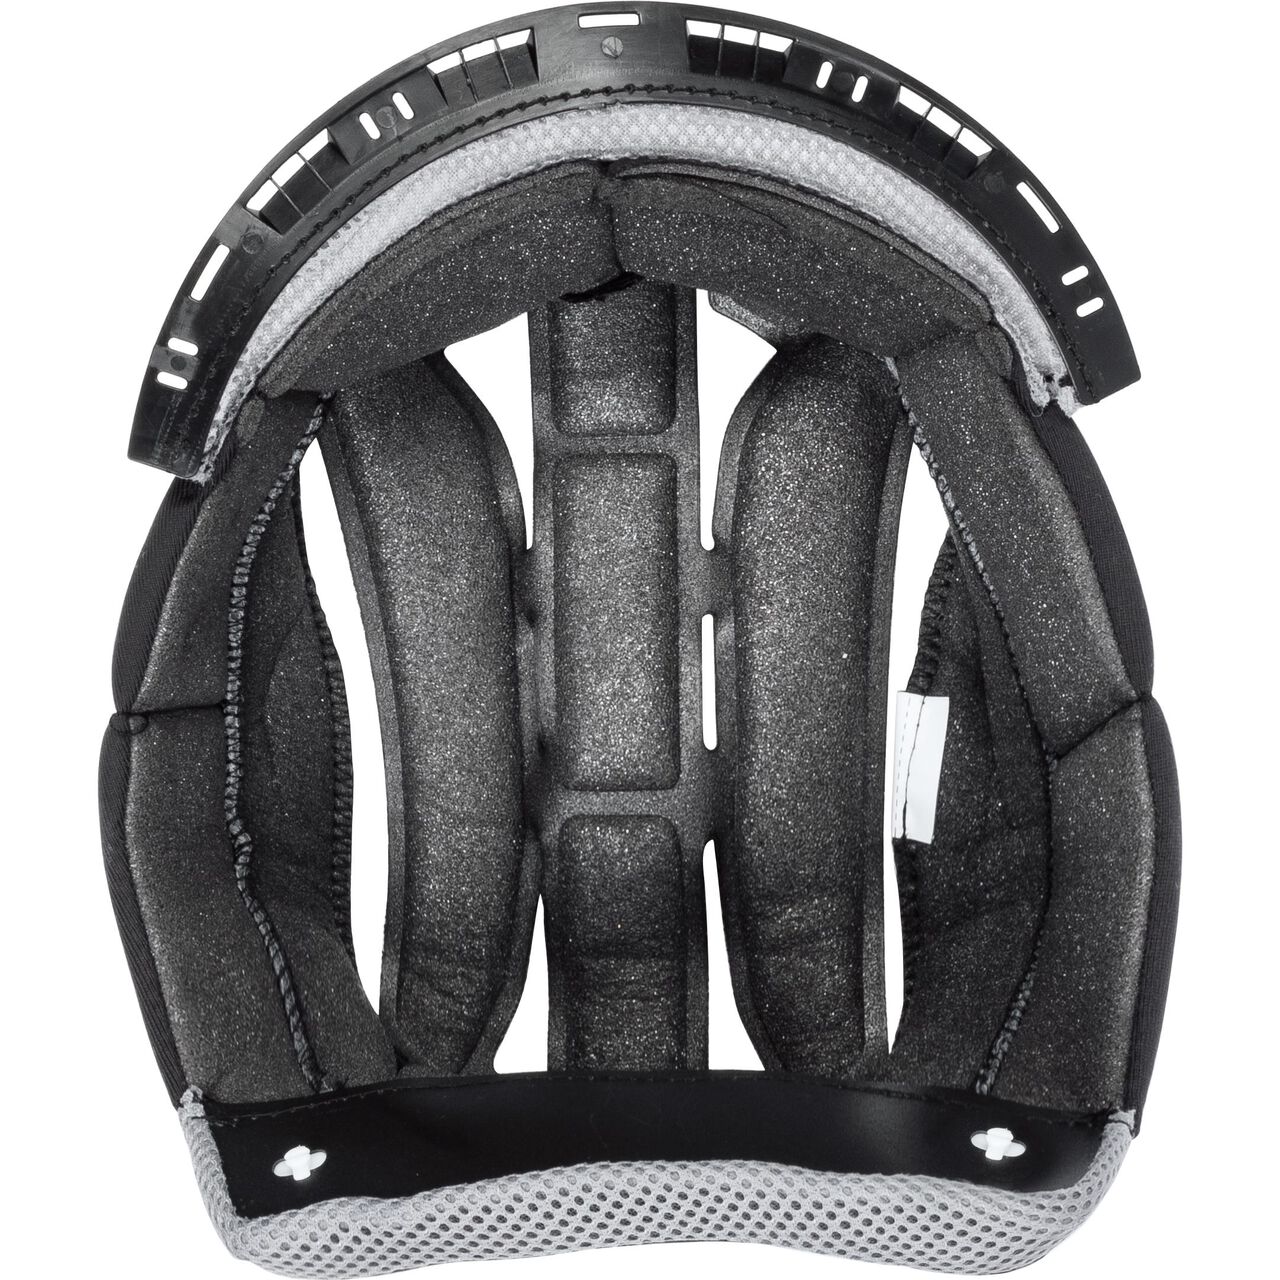 Interior cushion Jet helmet Comfort black/grey